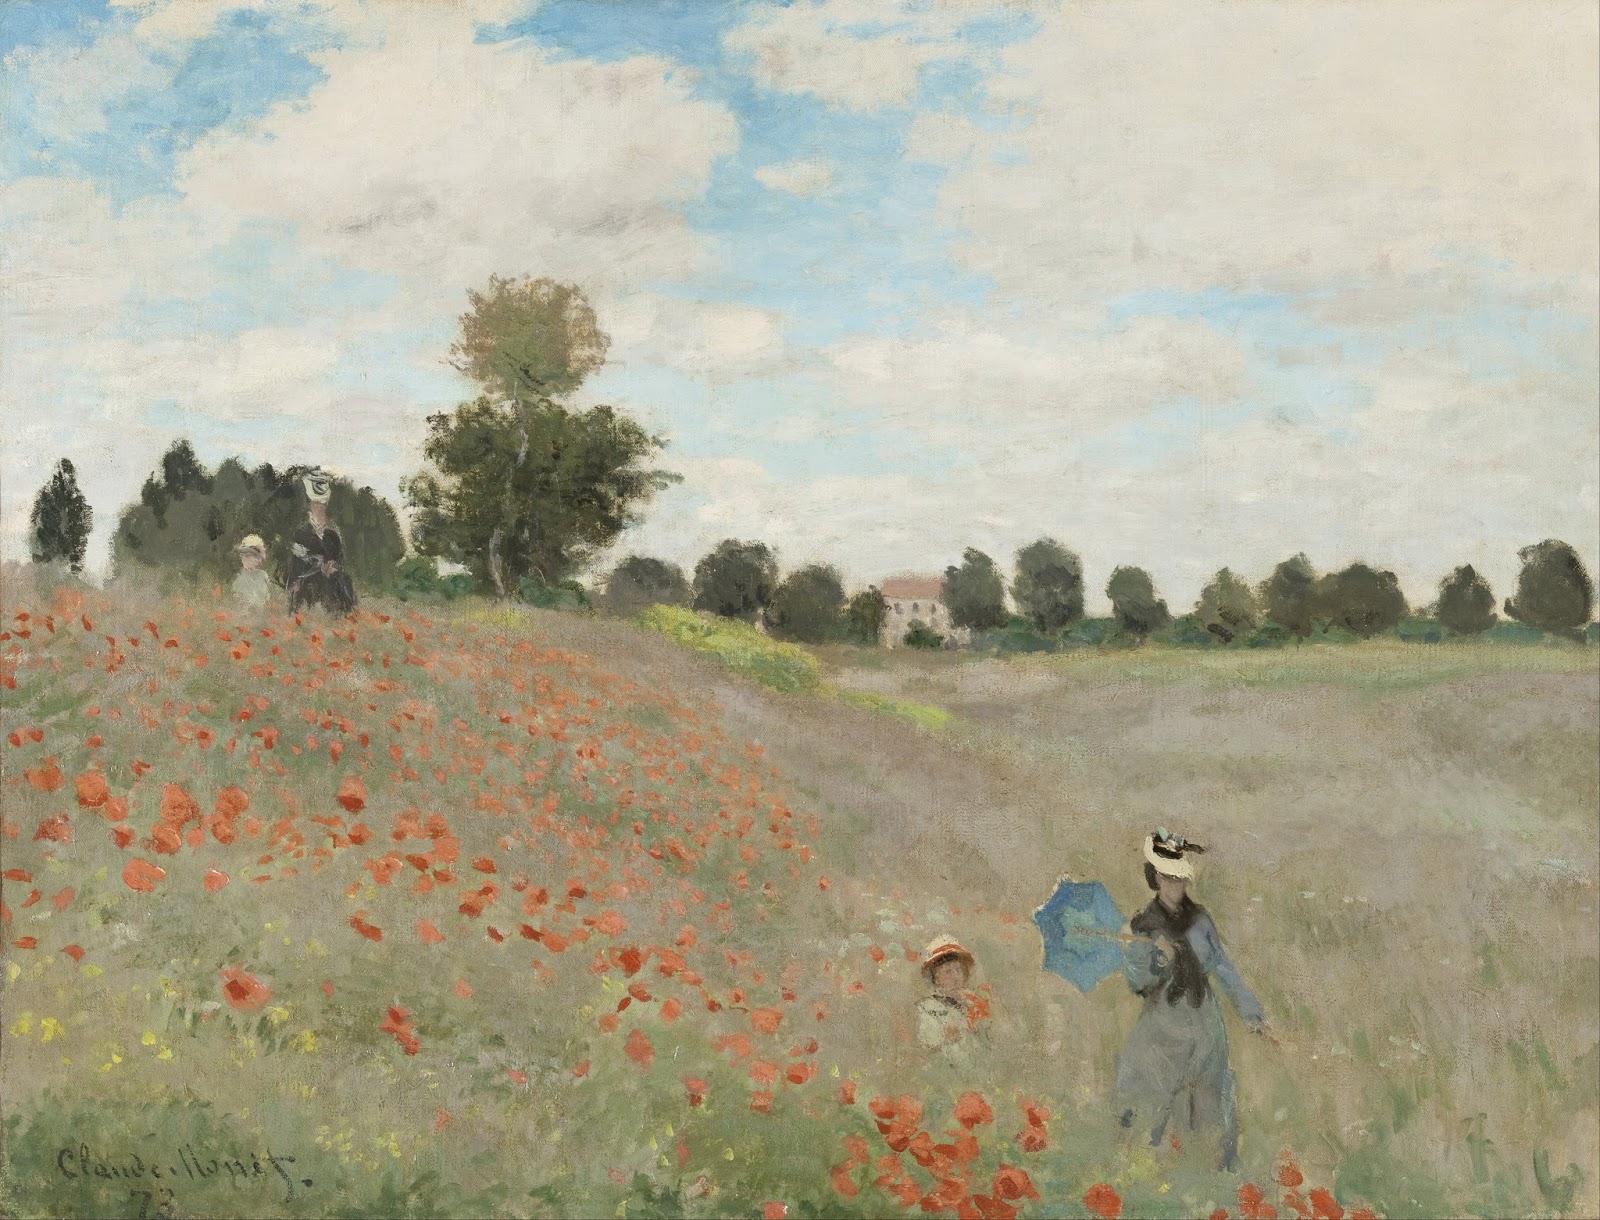 Claude+Monet-1840-1926 (588).jpg